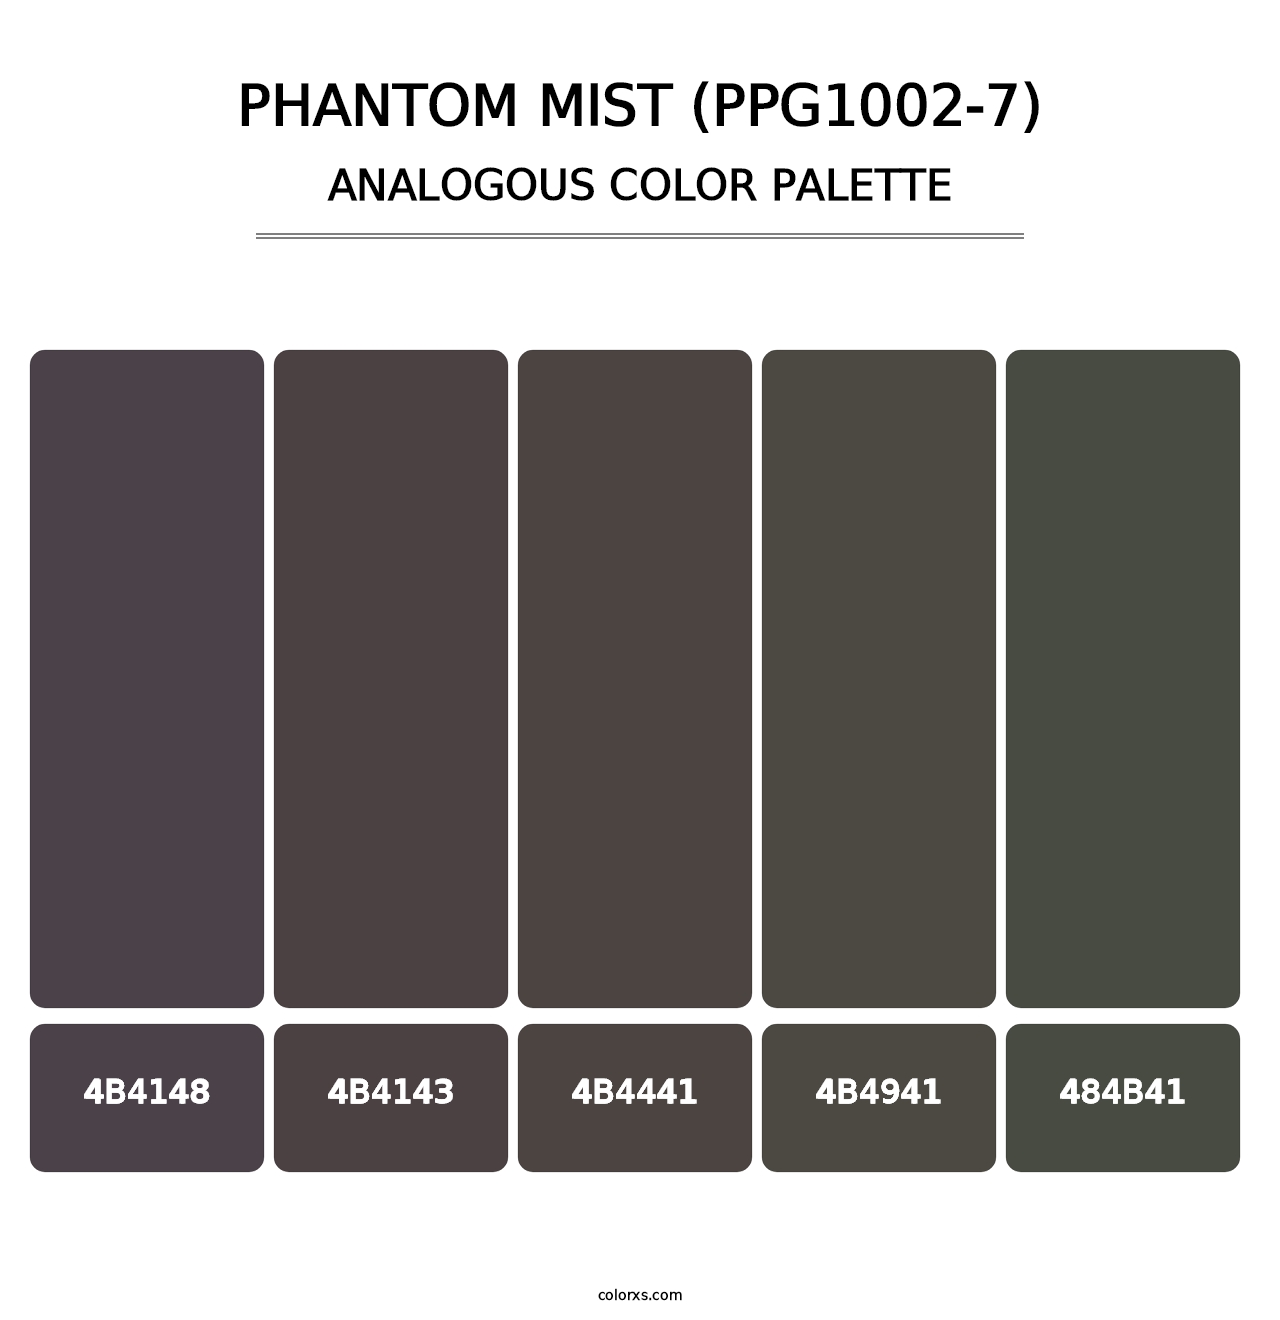 Phantom Mist (PPG1002-7) - Analogous Color Palette